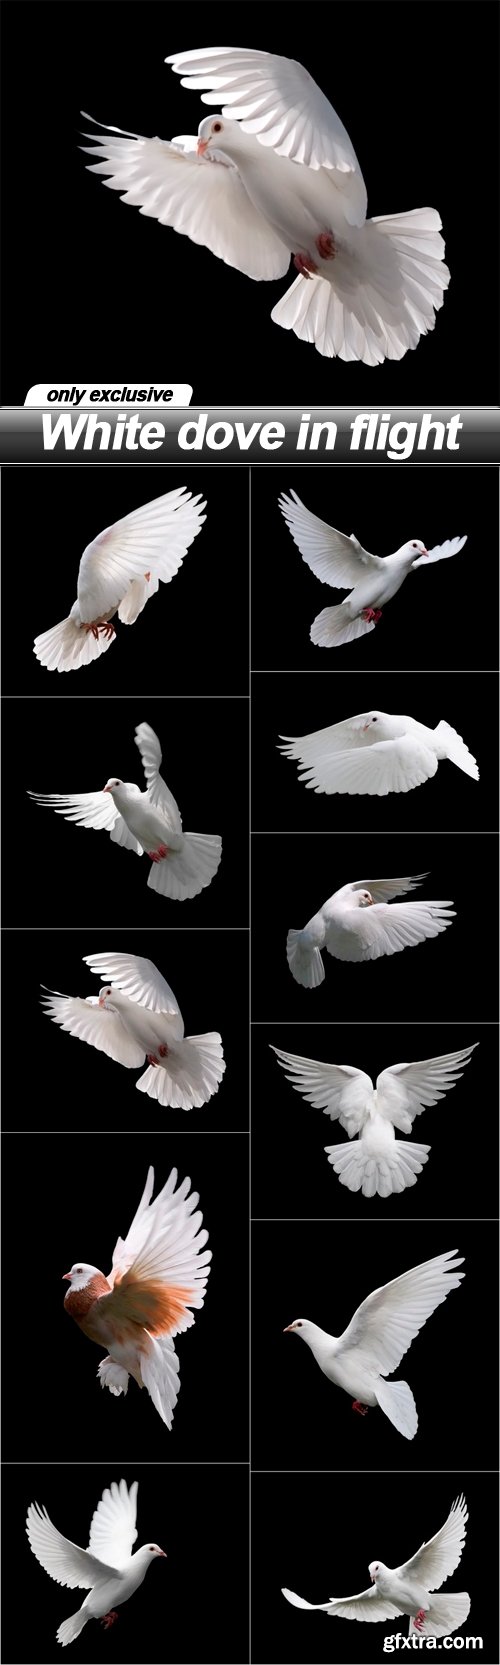 White dove in flight - 11 UHQ JPEG